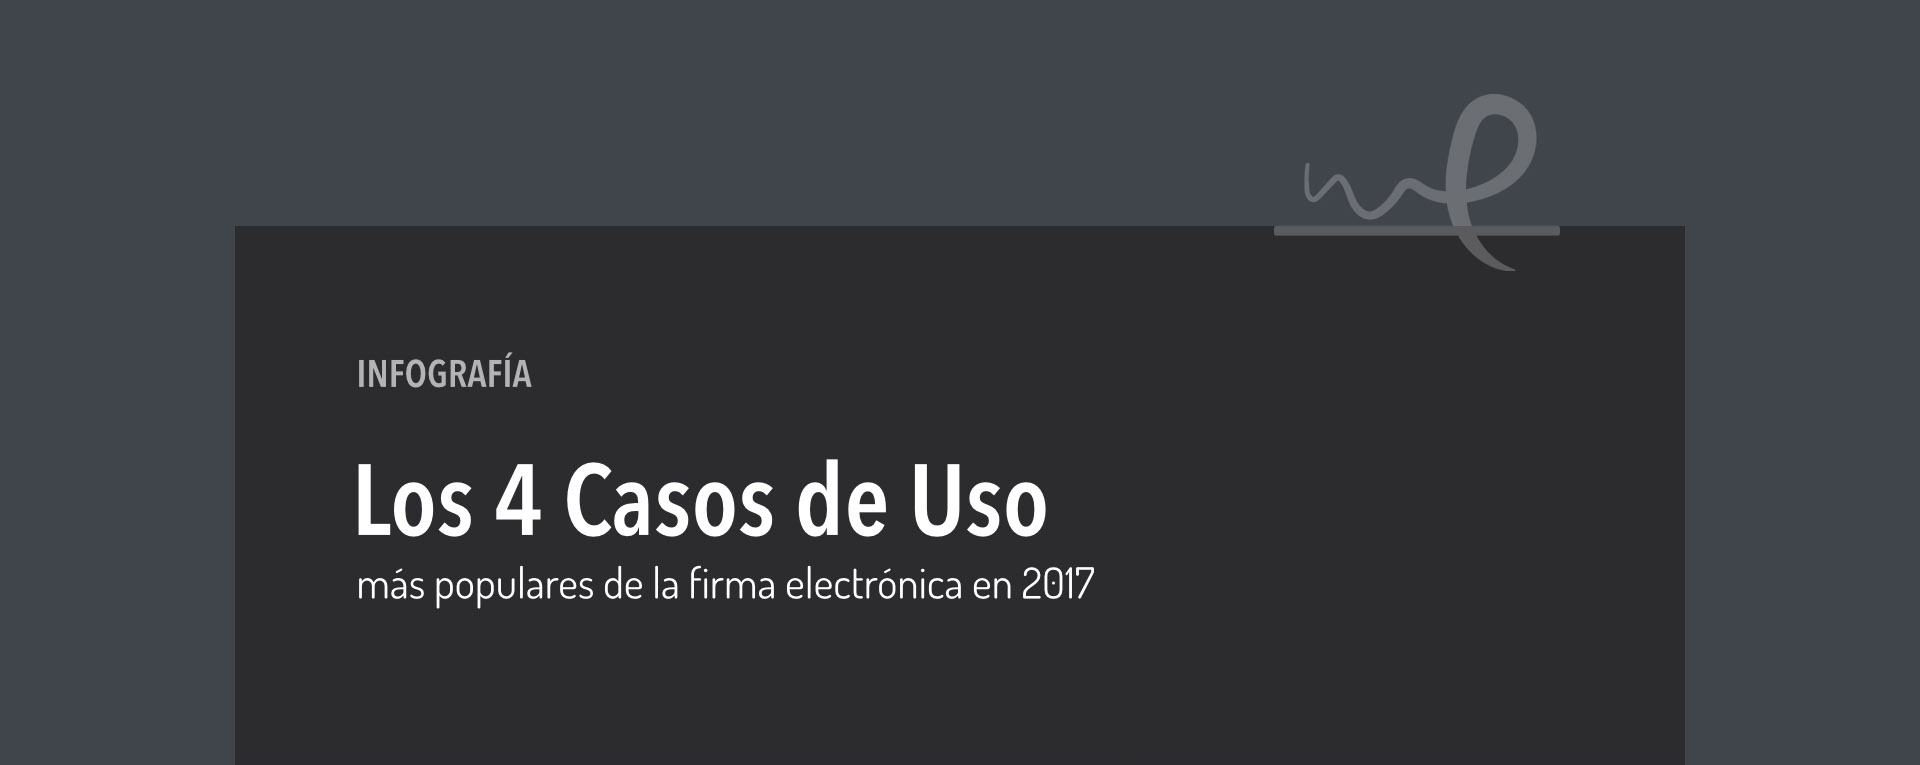 InfografÃ­a- Los 4 casos de uso mÃ¡s populares de la firma electrÃ³nica en 2017